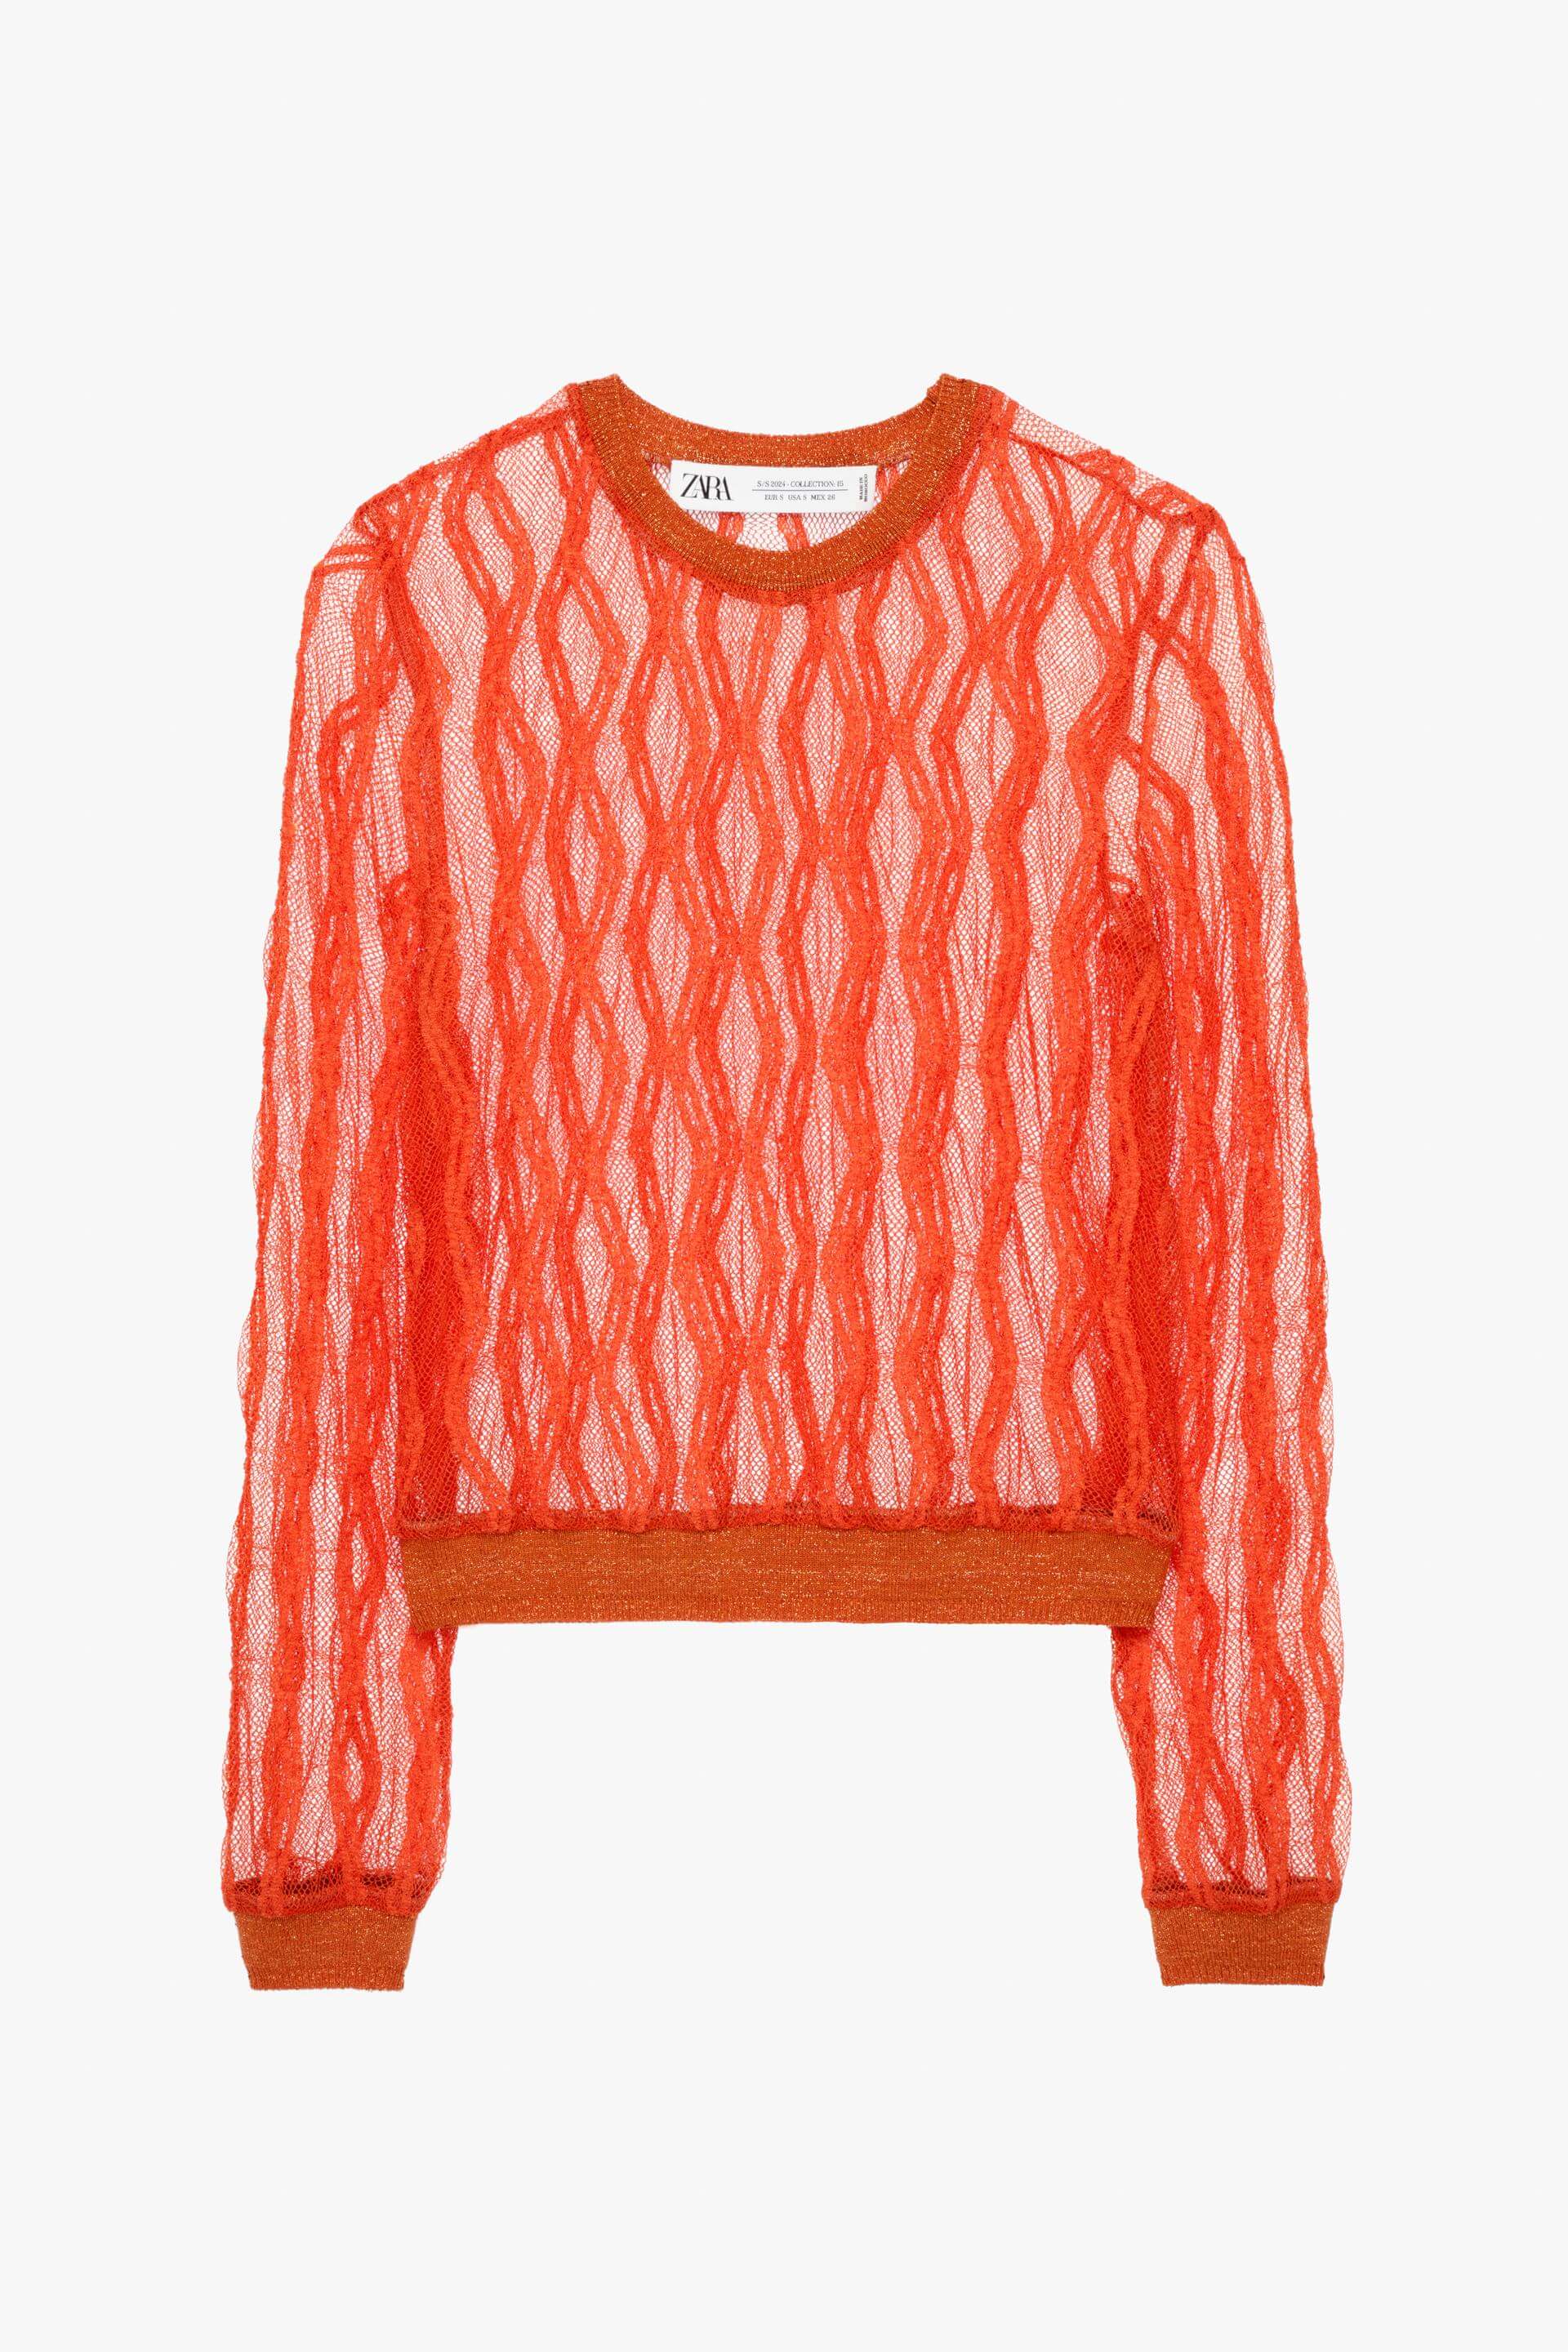 Топ Zara Knit - Limited Edition, оранжевый футболка zara lightweight limited edition экрю